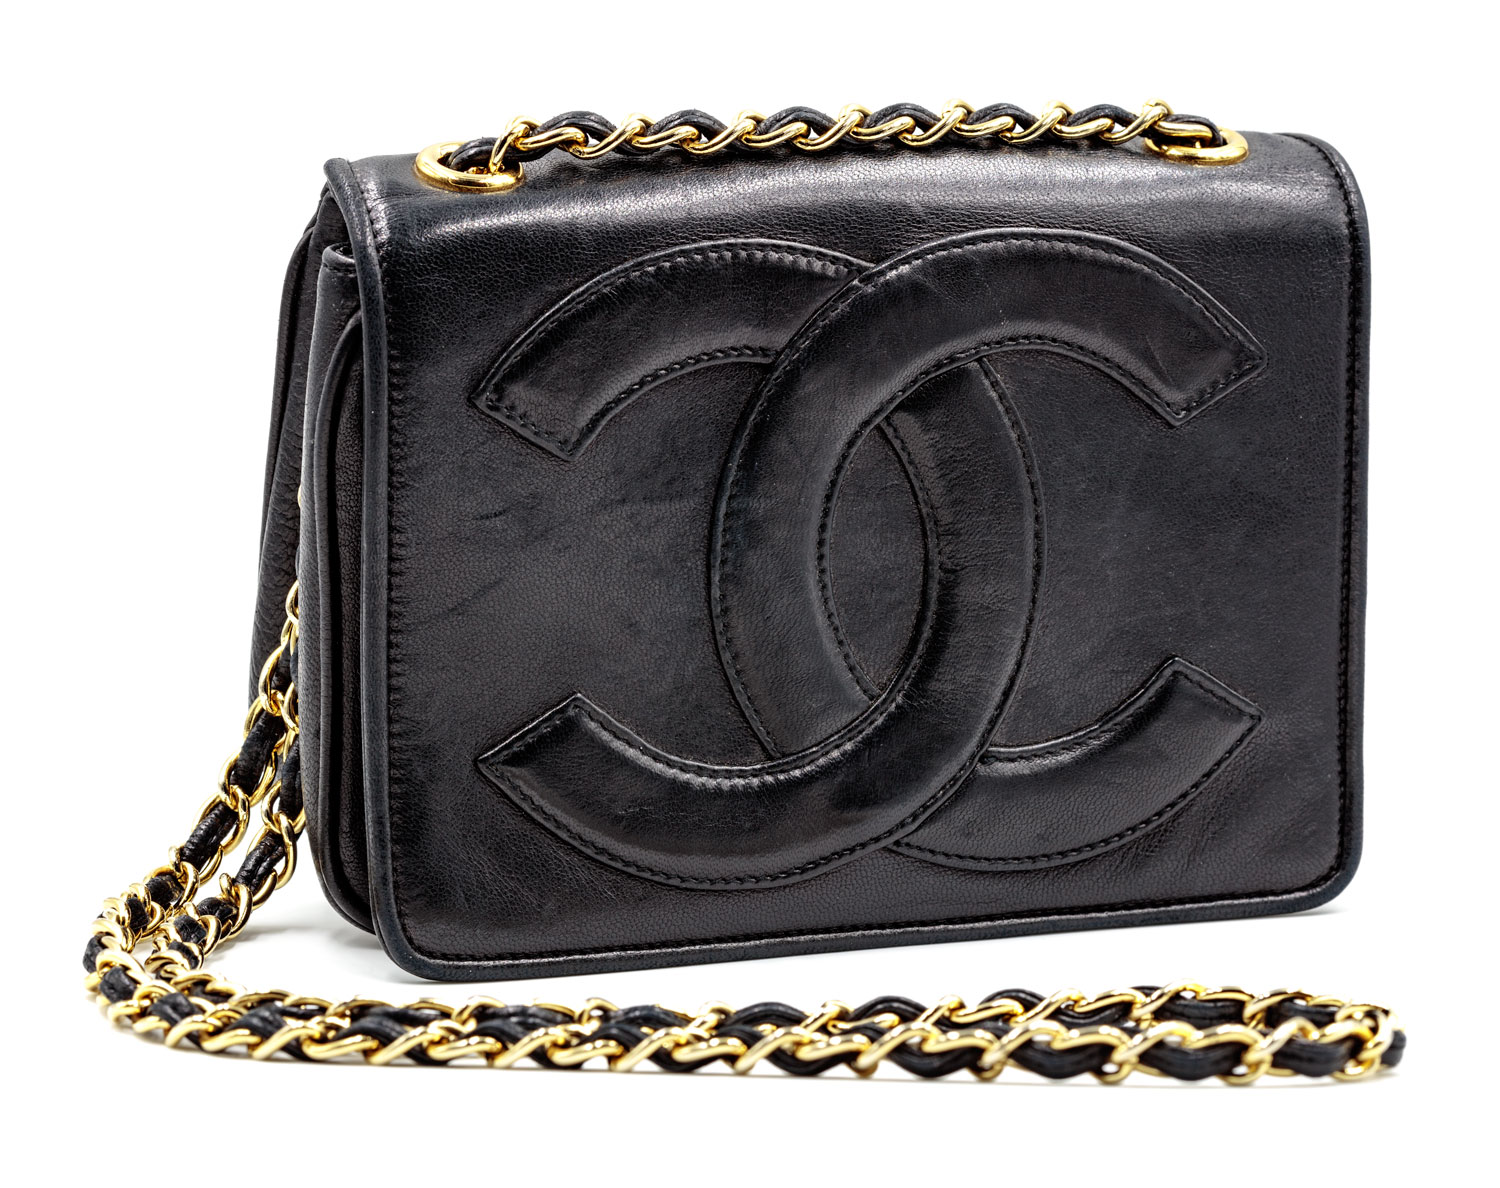 Statement leather handbag Chanel Black in Leather - 25826204